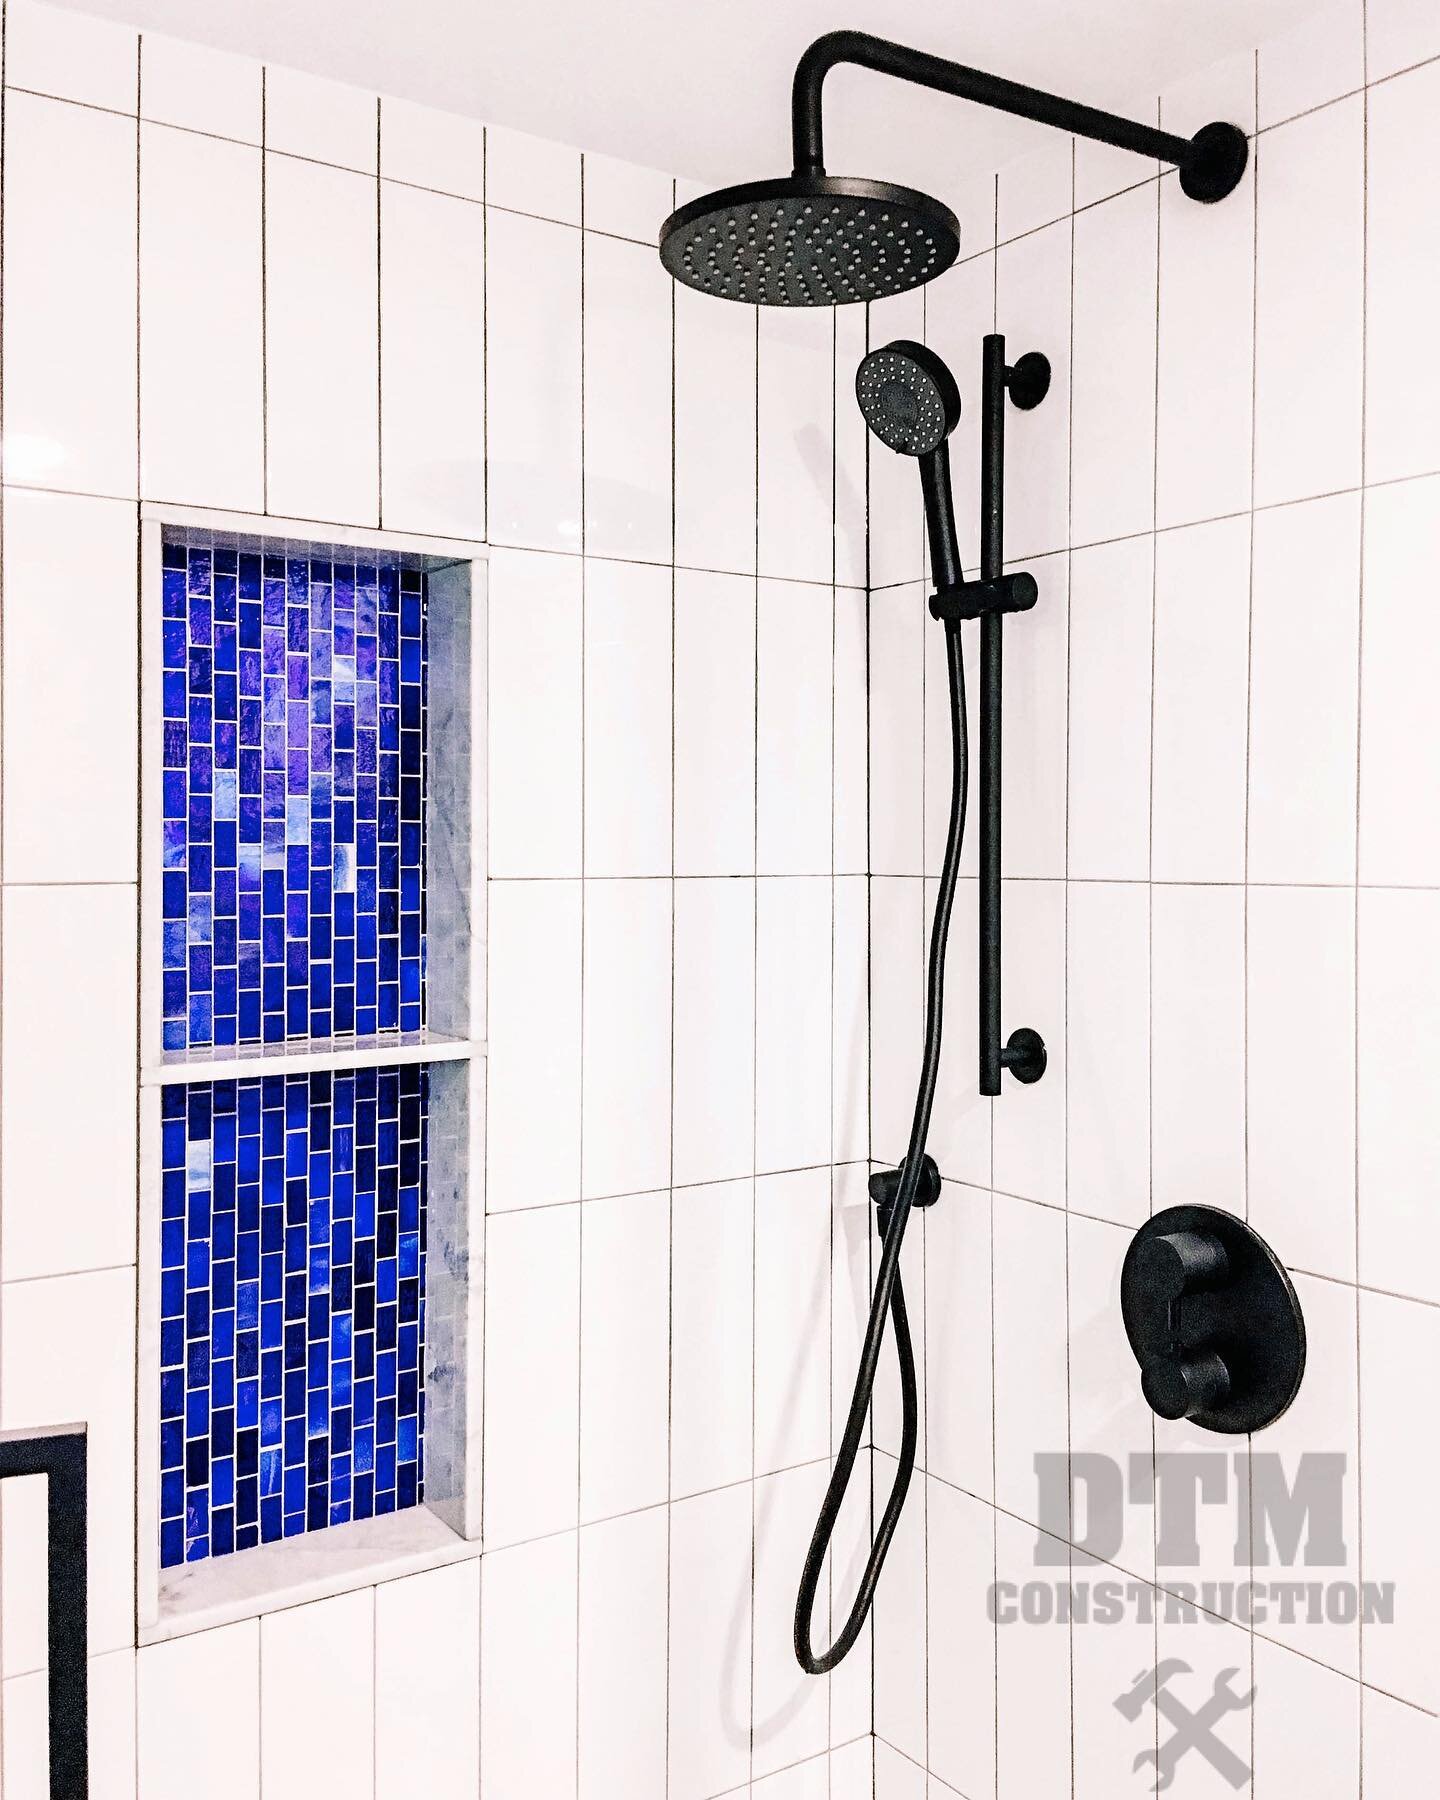 Starting your weekend off right with a splash of colour!💧 ⠀
⠀
#bathroom #bathroomdesign #design #remodel #modernbathroom #dtmconstruction #construction #tile #bath #shower #tub #sink #vanity #bathroomdecor #homedecor #interiordecor #bathroominspo #b